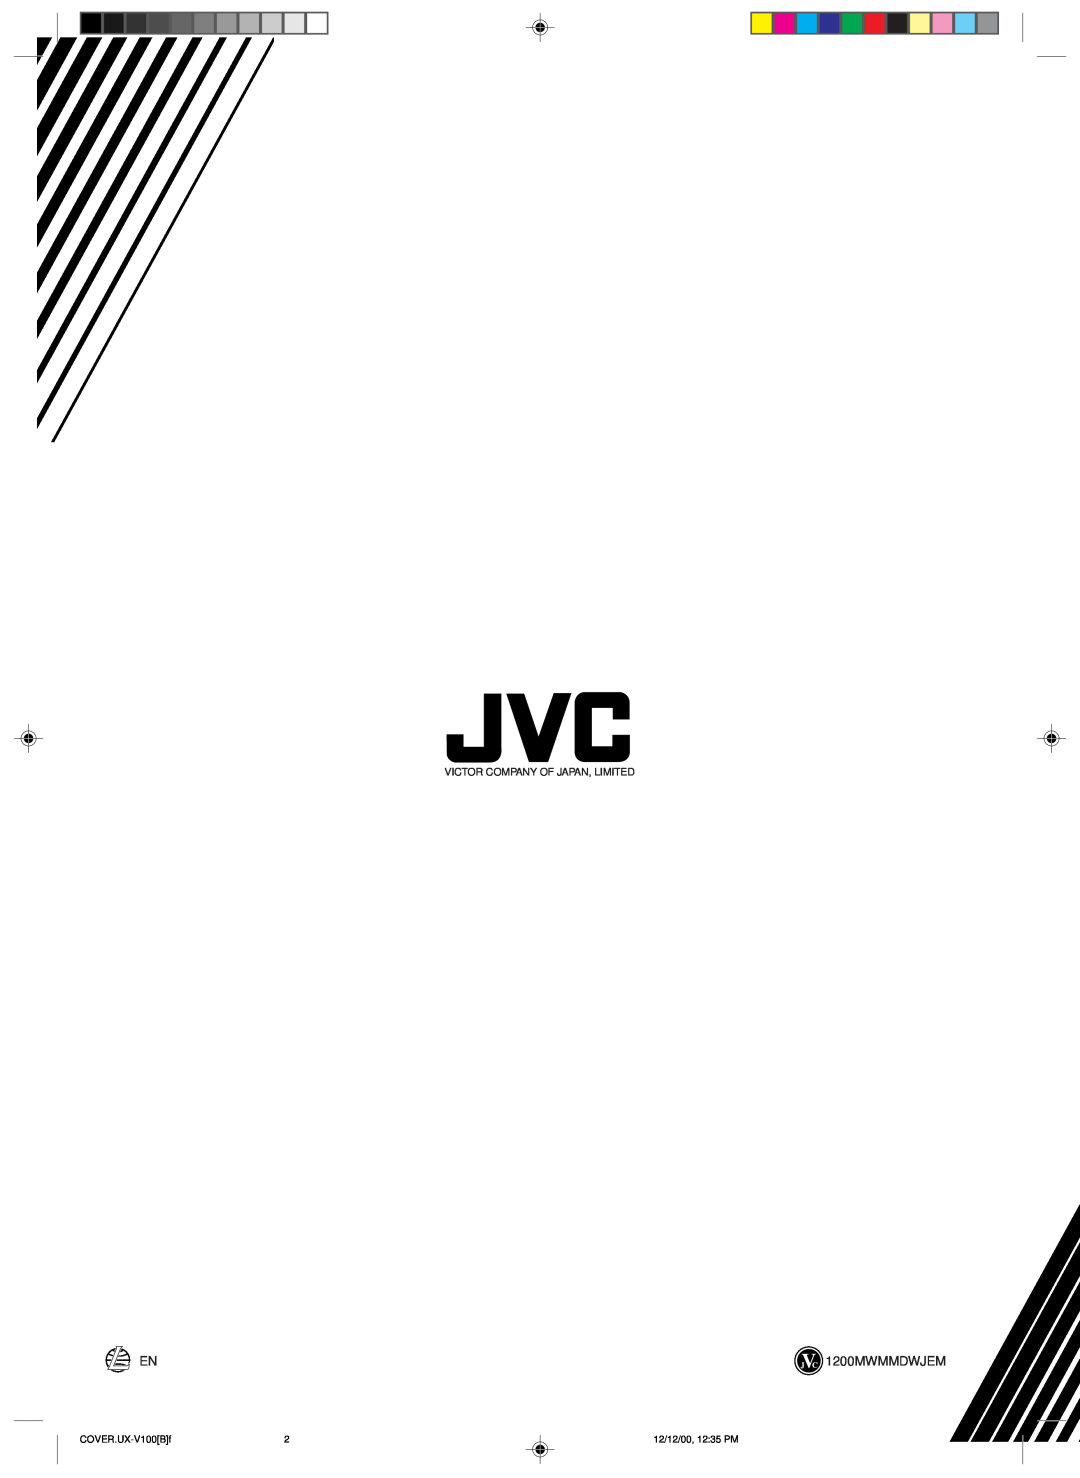 JVC CA-UXV100, SP-UXV100 manual 1200MWMMDWJEM, Victor Company Of Japan, Limited, COVER.UX-V100Bf, 12/12/00, 12 35 PM 